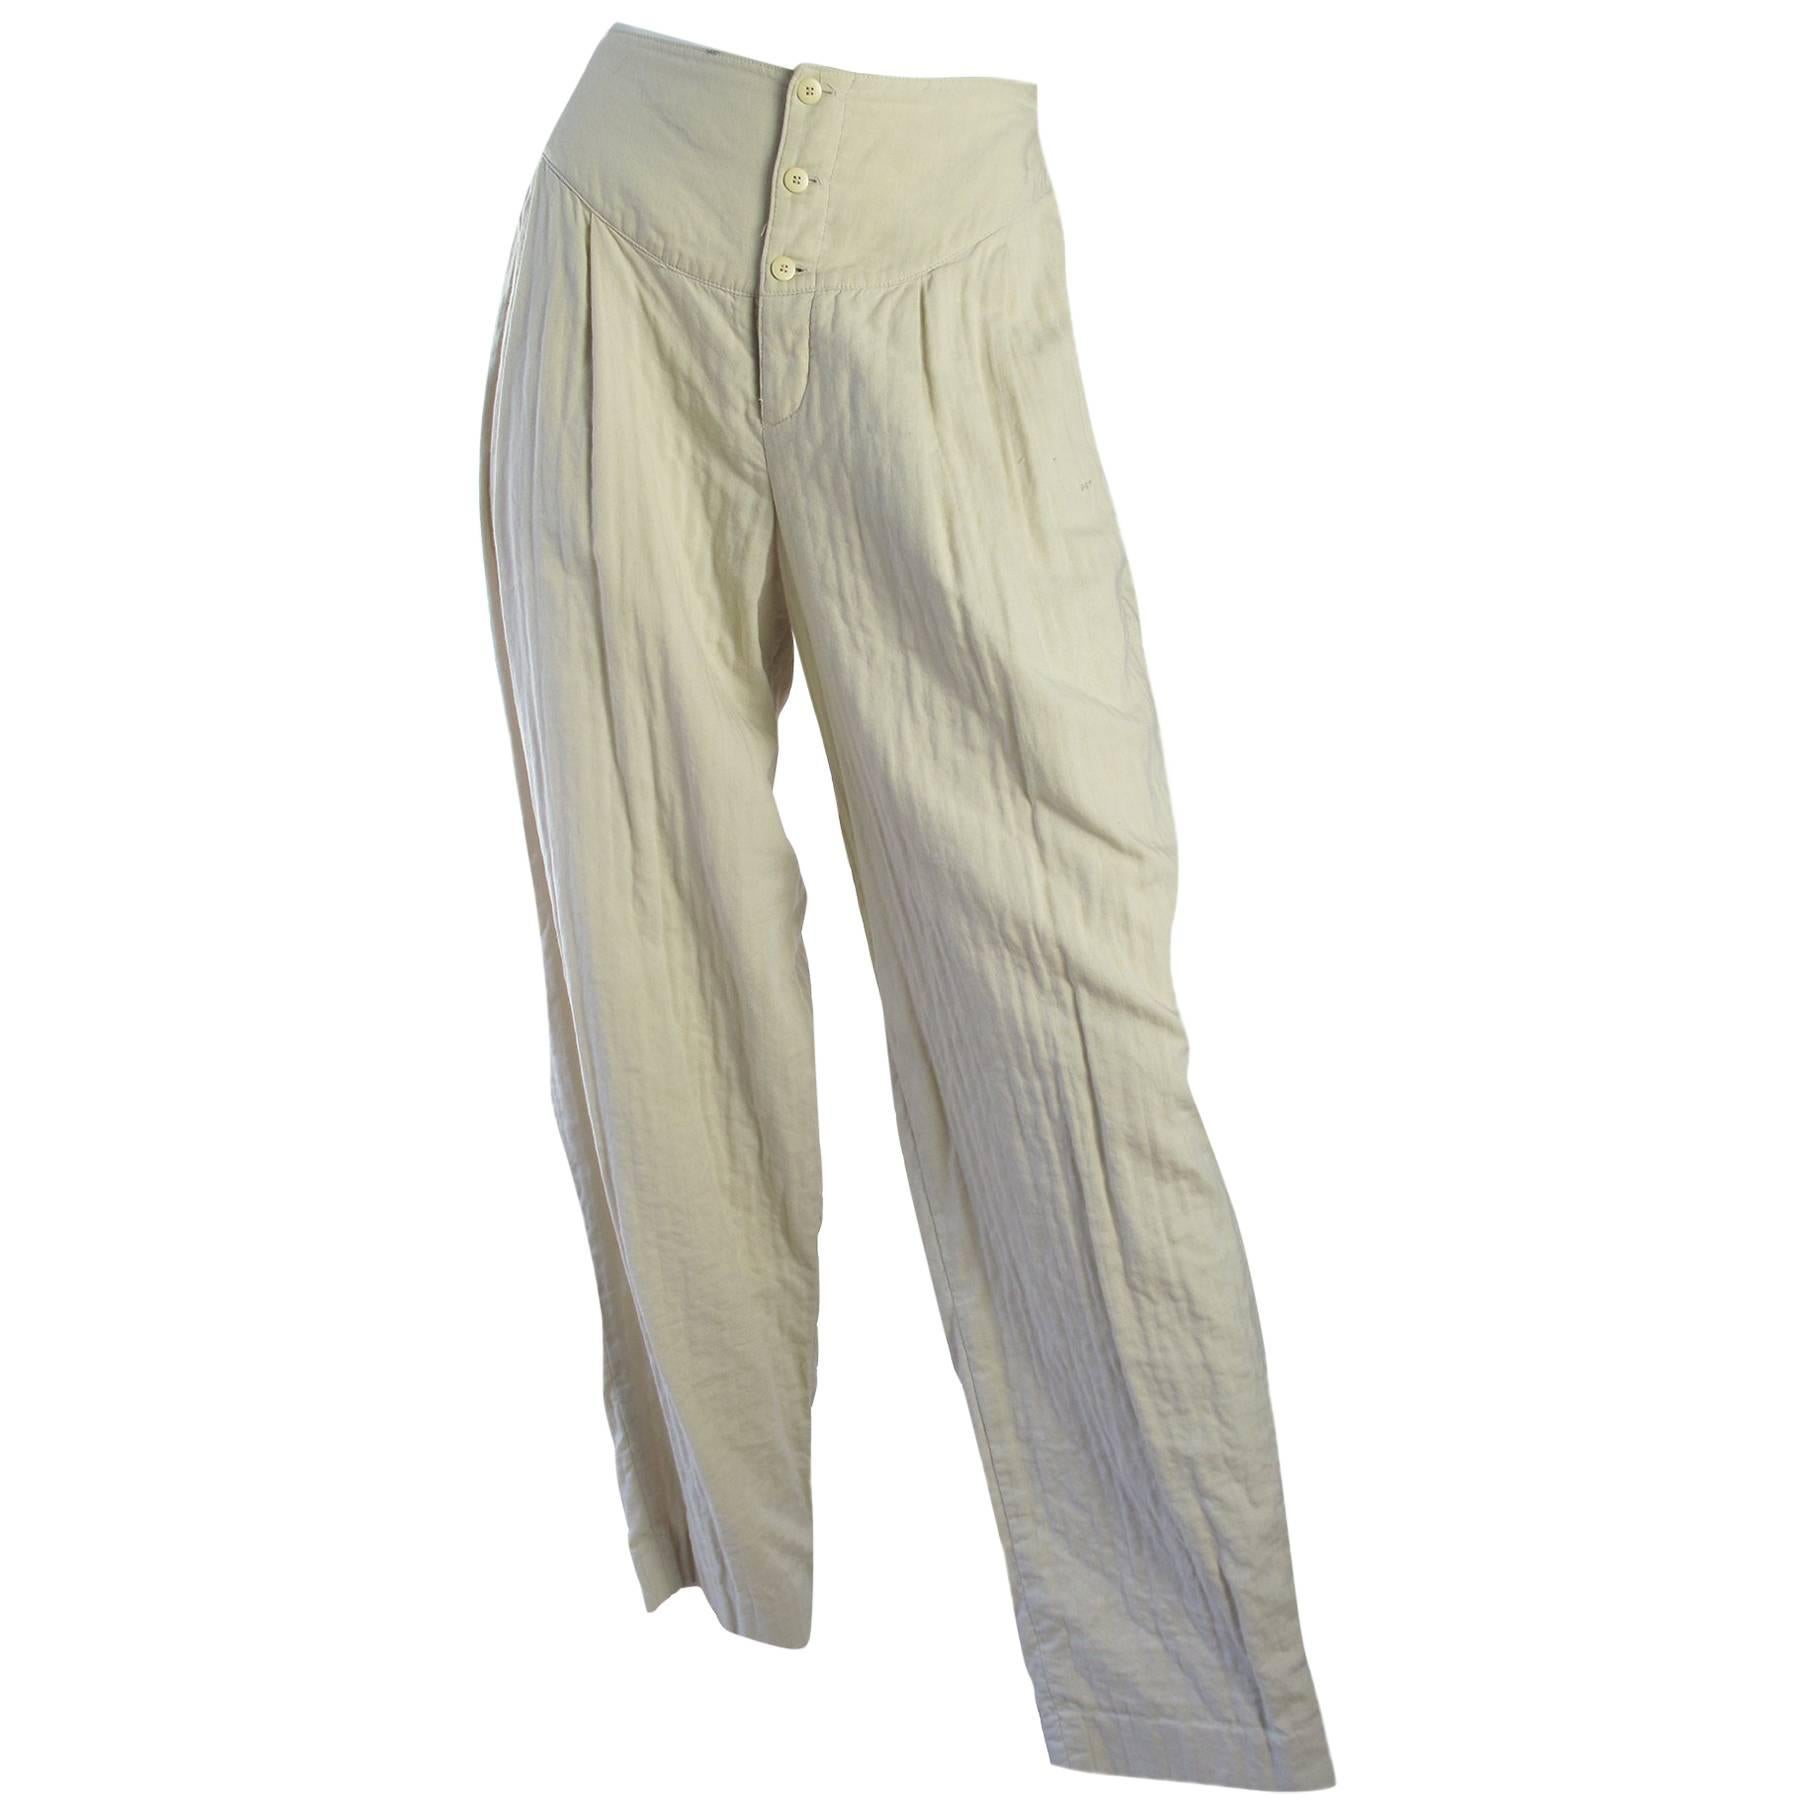 Issey Miyake High Waisted Drawstring Back cotton pants, 1980s